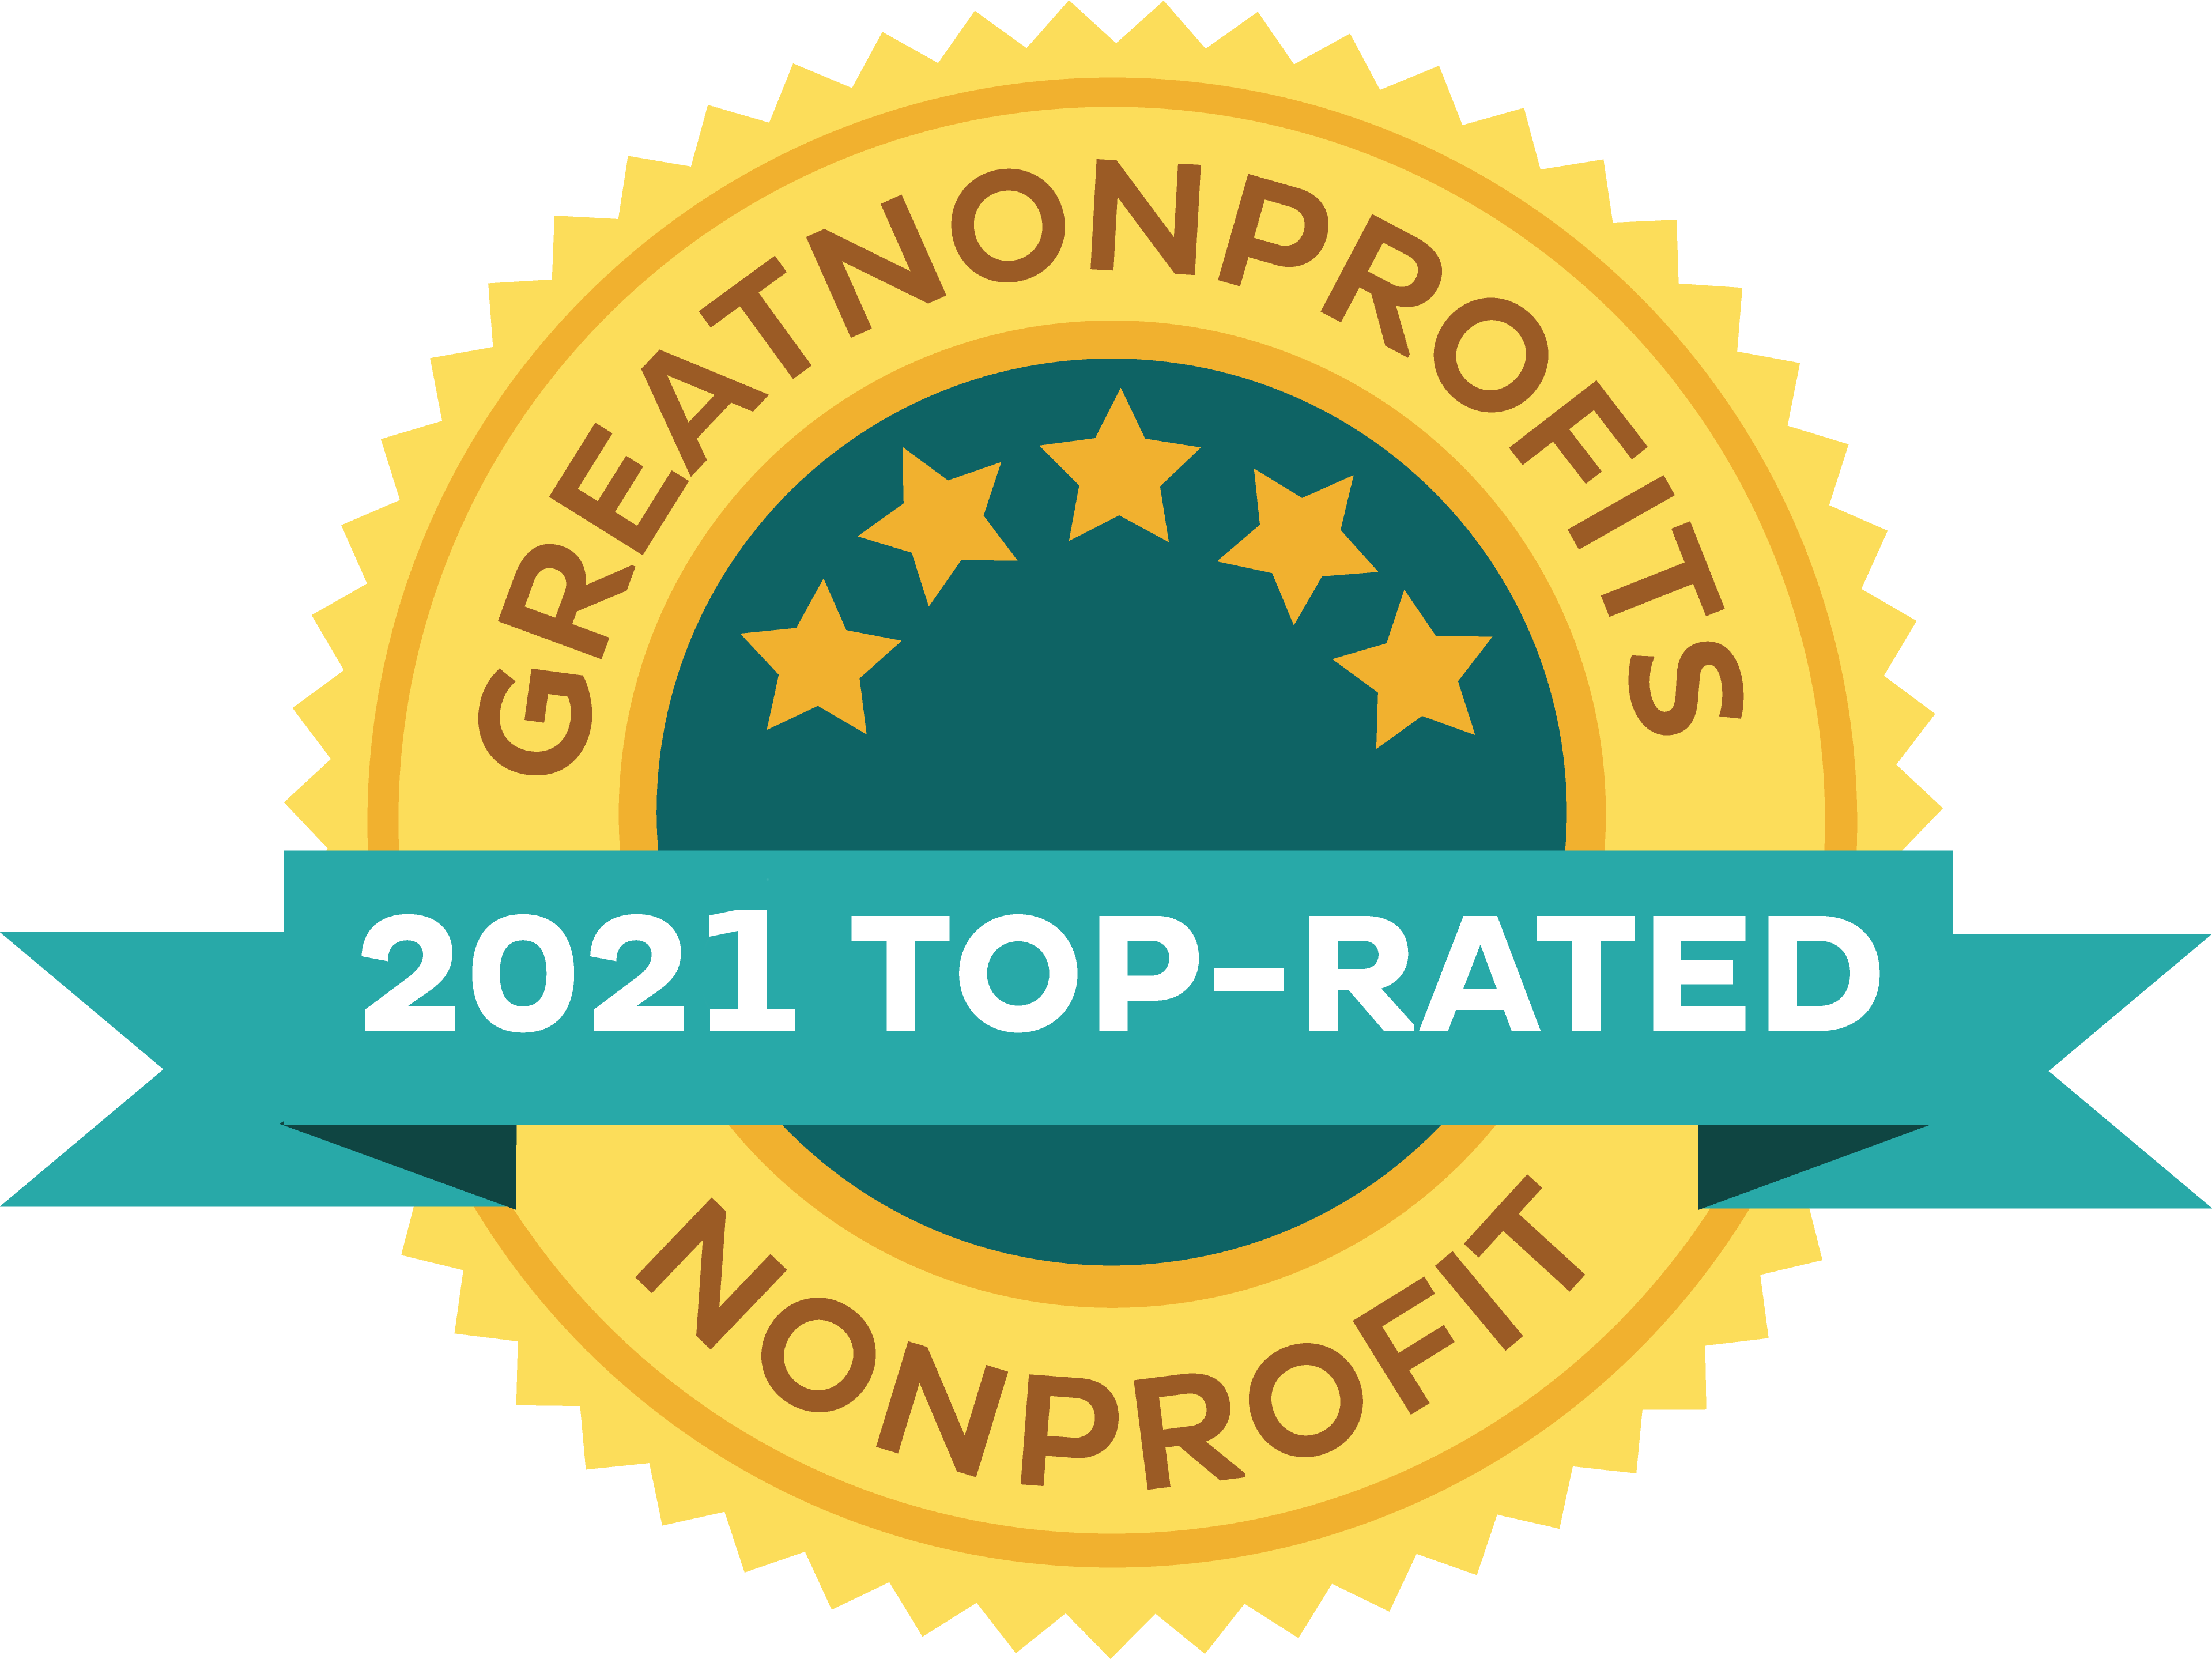 Greatnonprofits 2021 Top-Rated Nonprofit seal